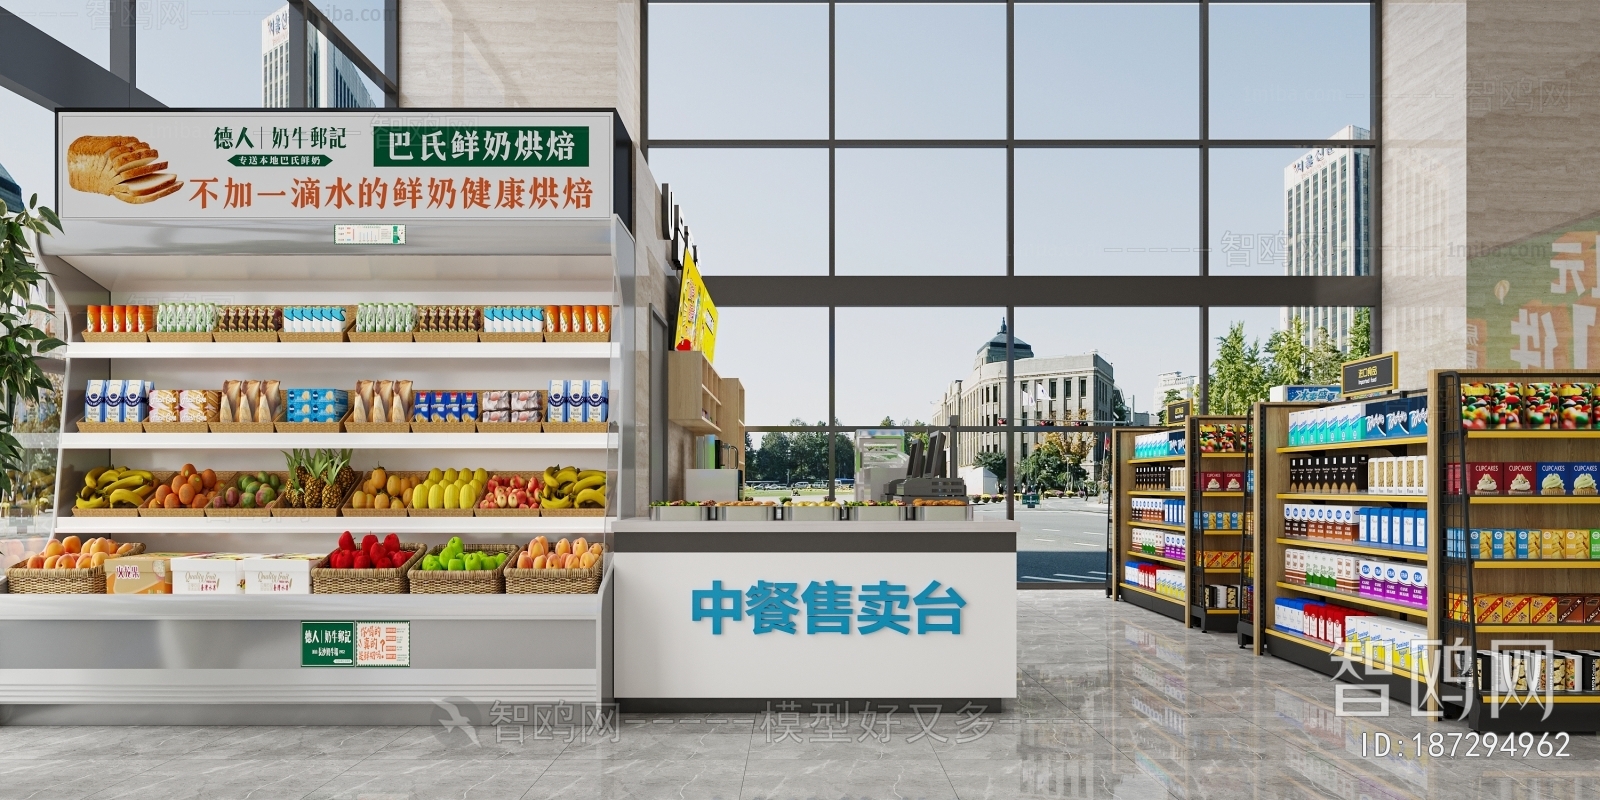 Modern Convenience Store